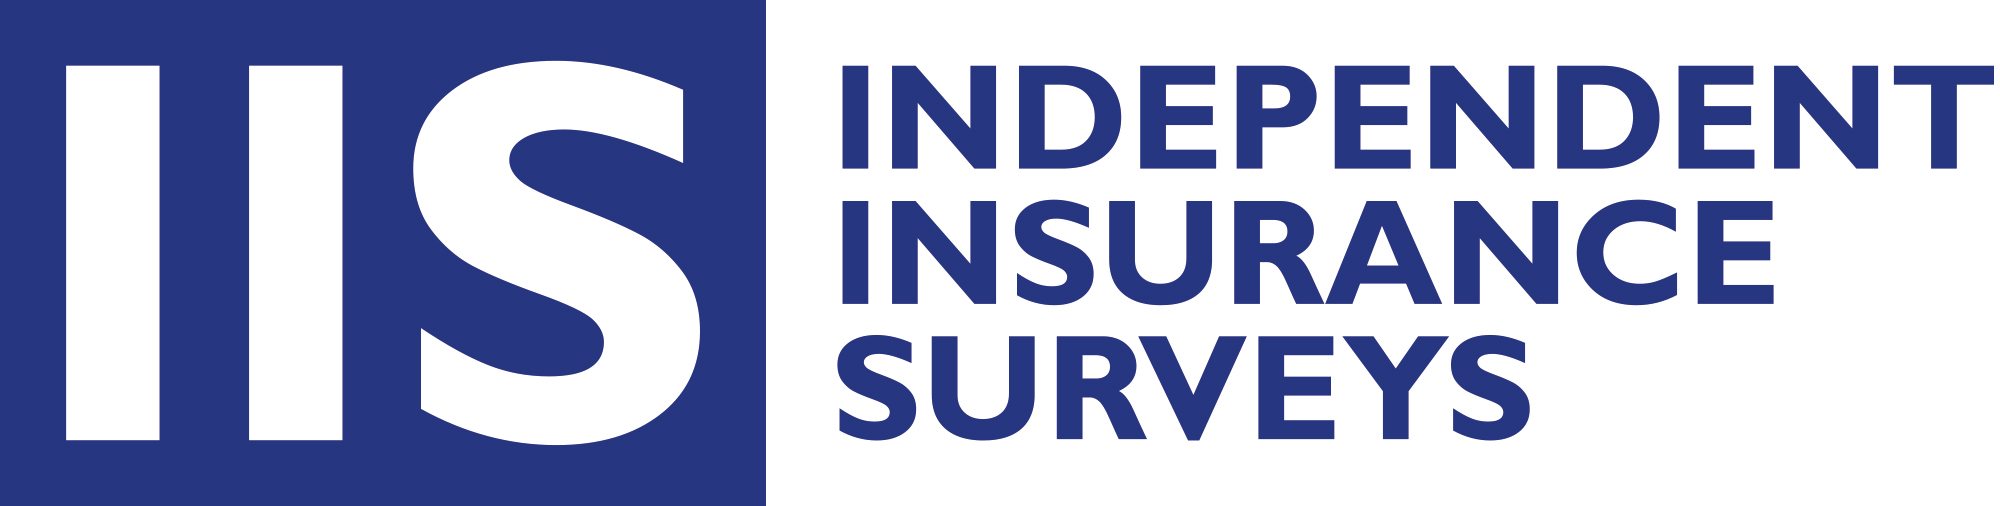 Independent Insurance Surveys Limited - IIS Ltd